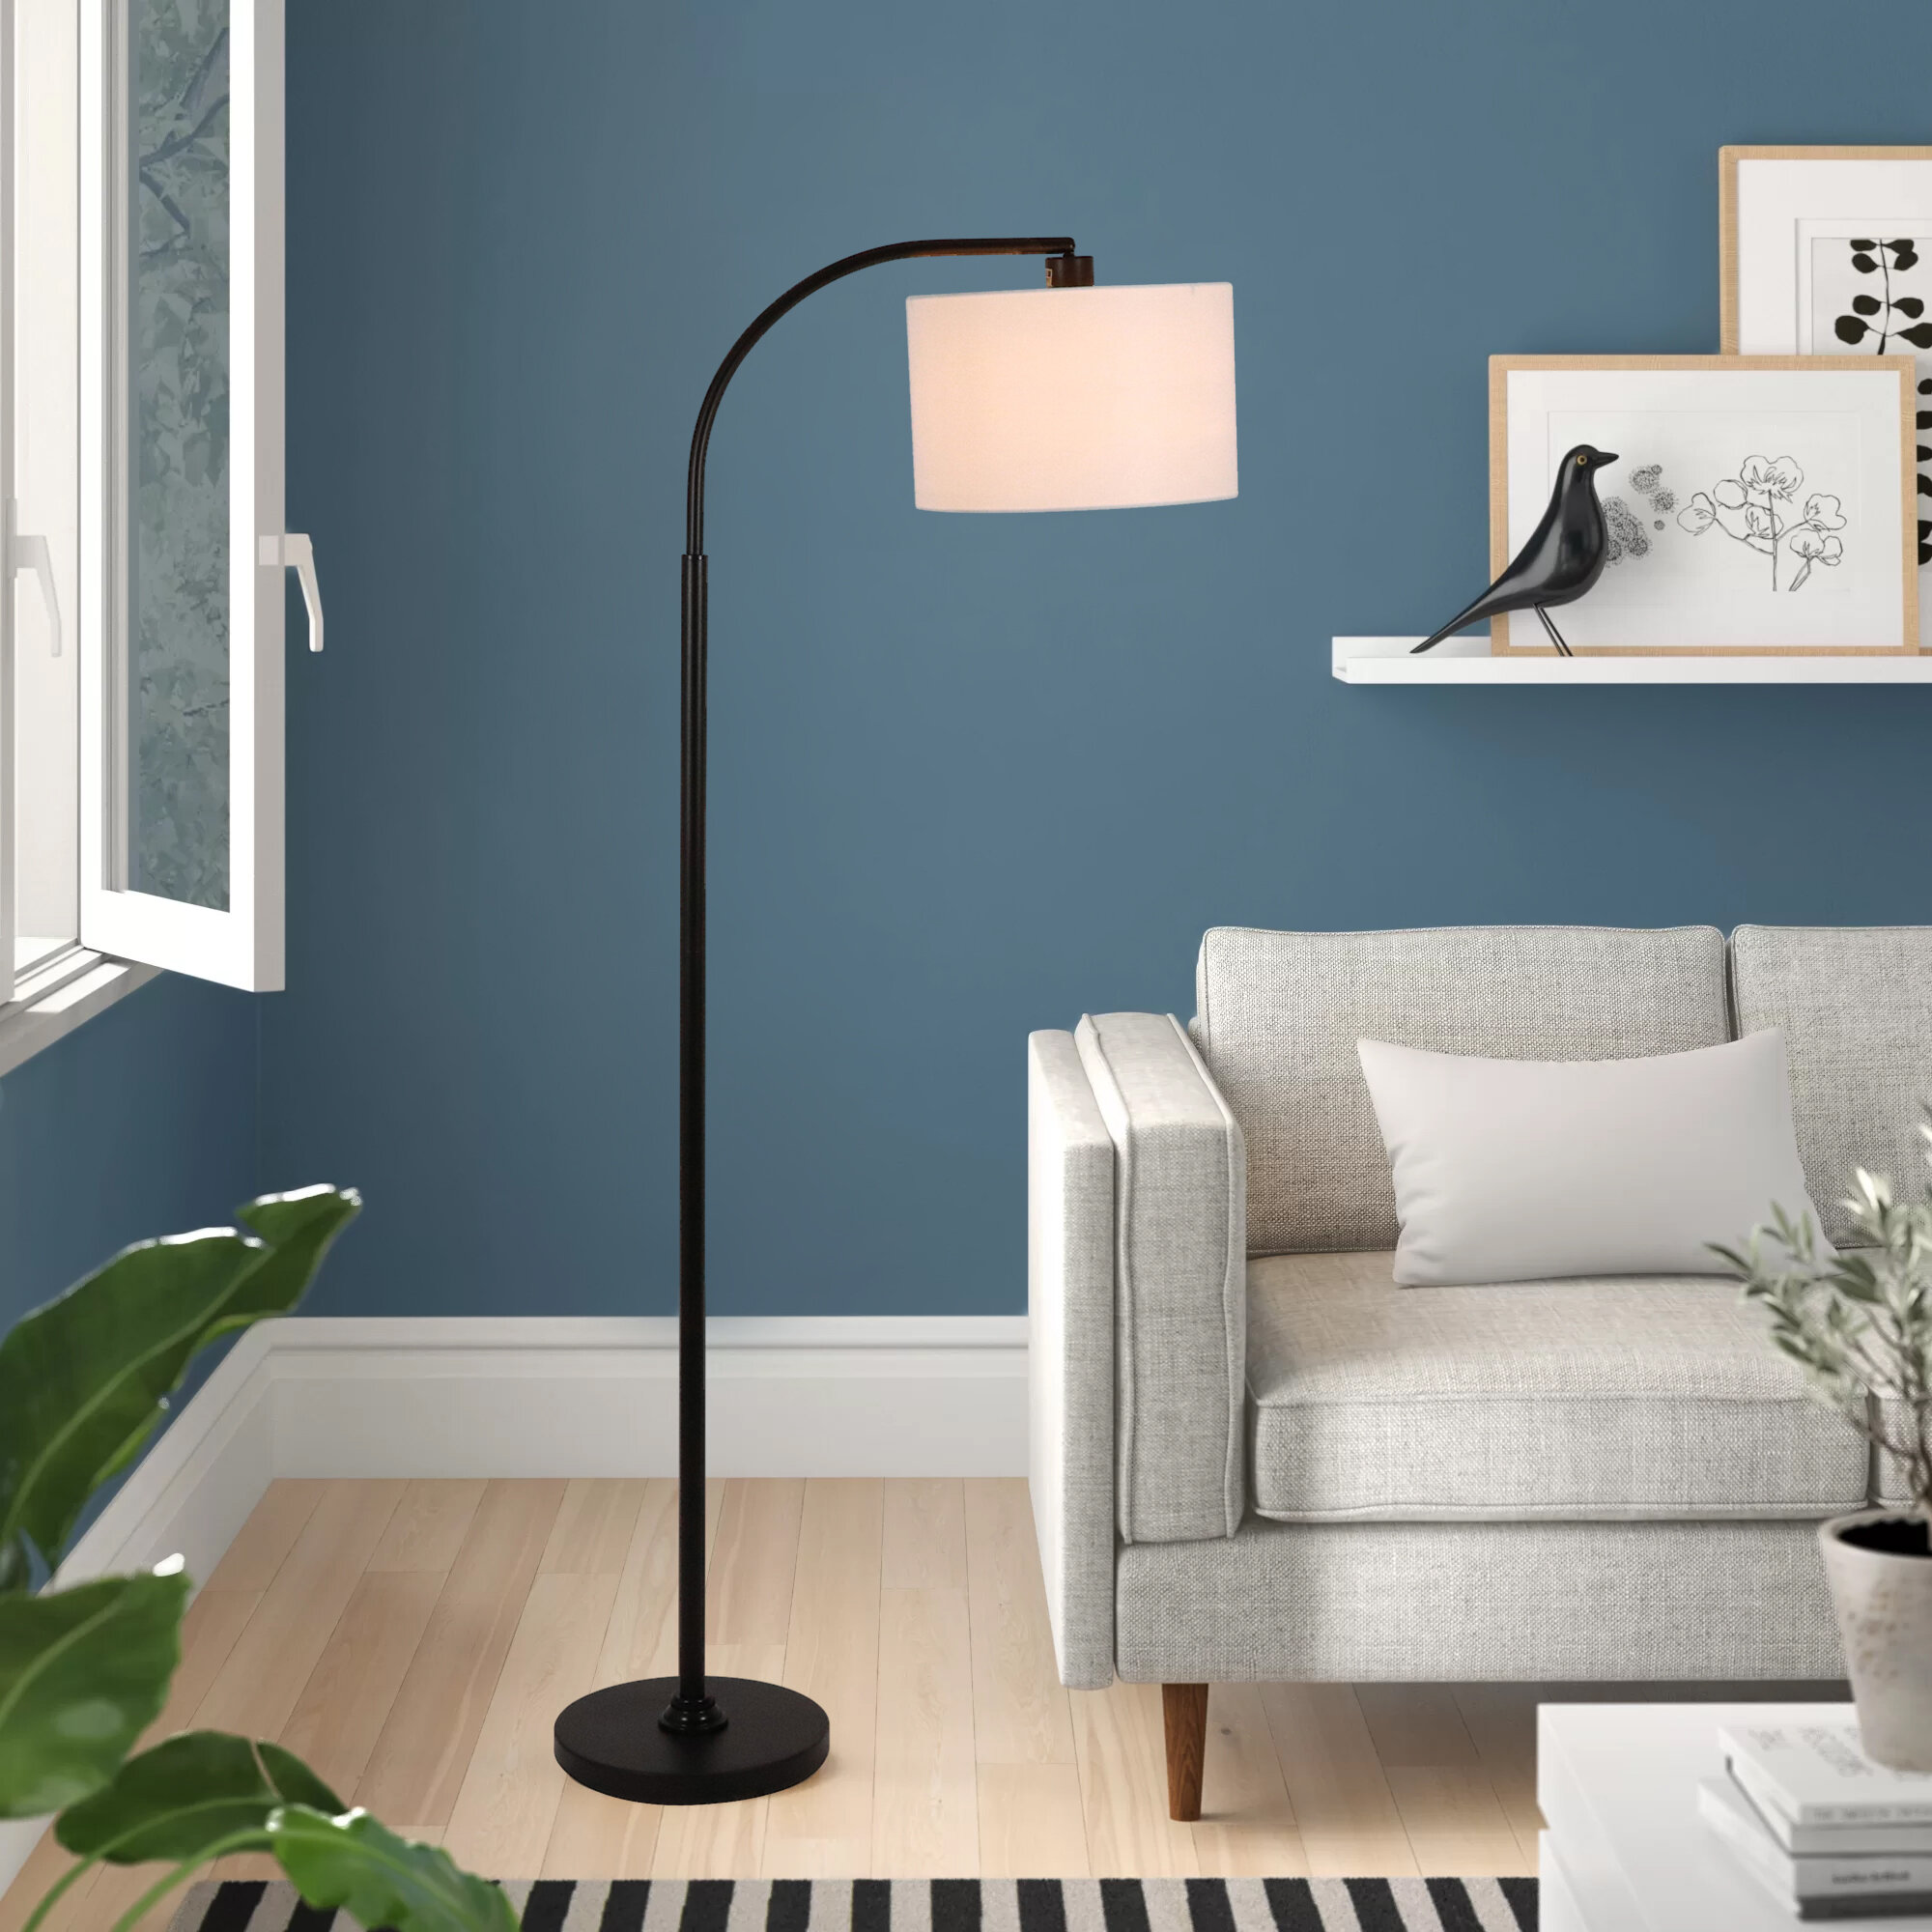 Midress Minimalist Tray LED Floor Lamp Living Room Study Bedroom Floor Lamp Vertical Storage Tray Floor Lamp Table Lamp with Hanging Drum Shade